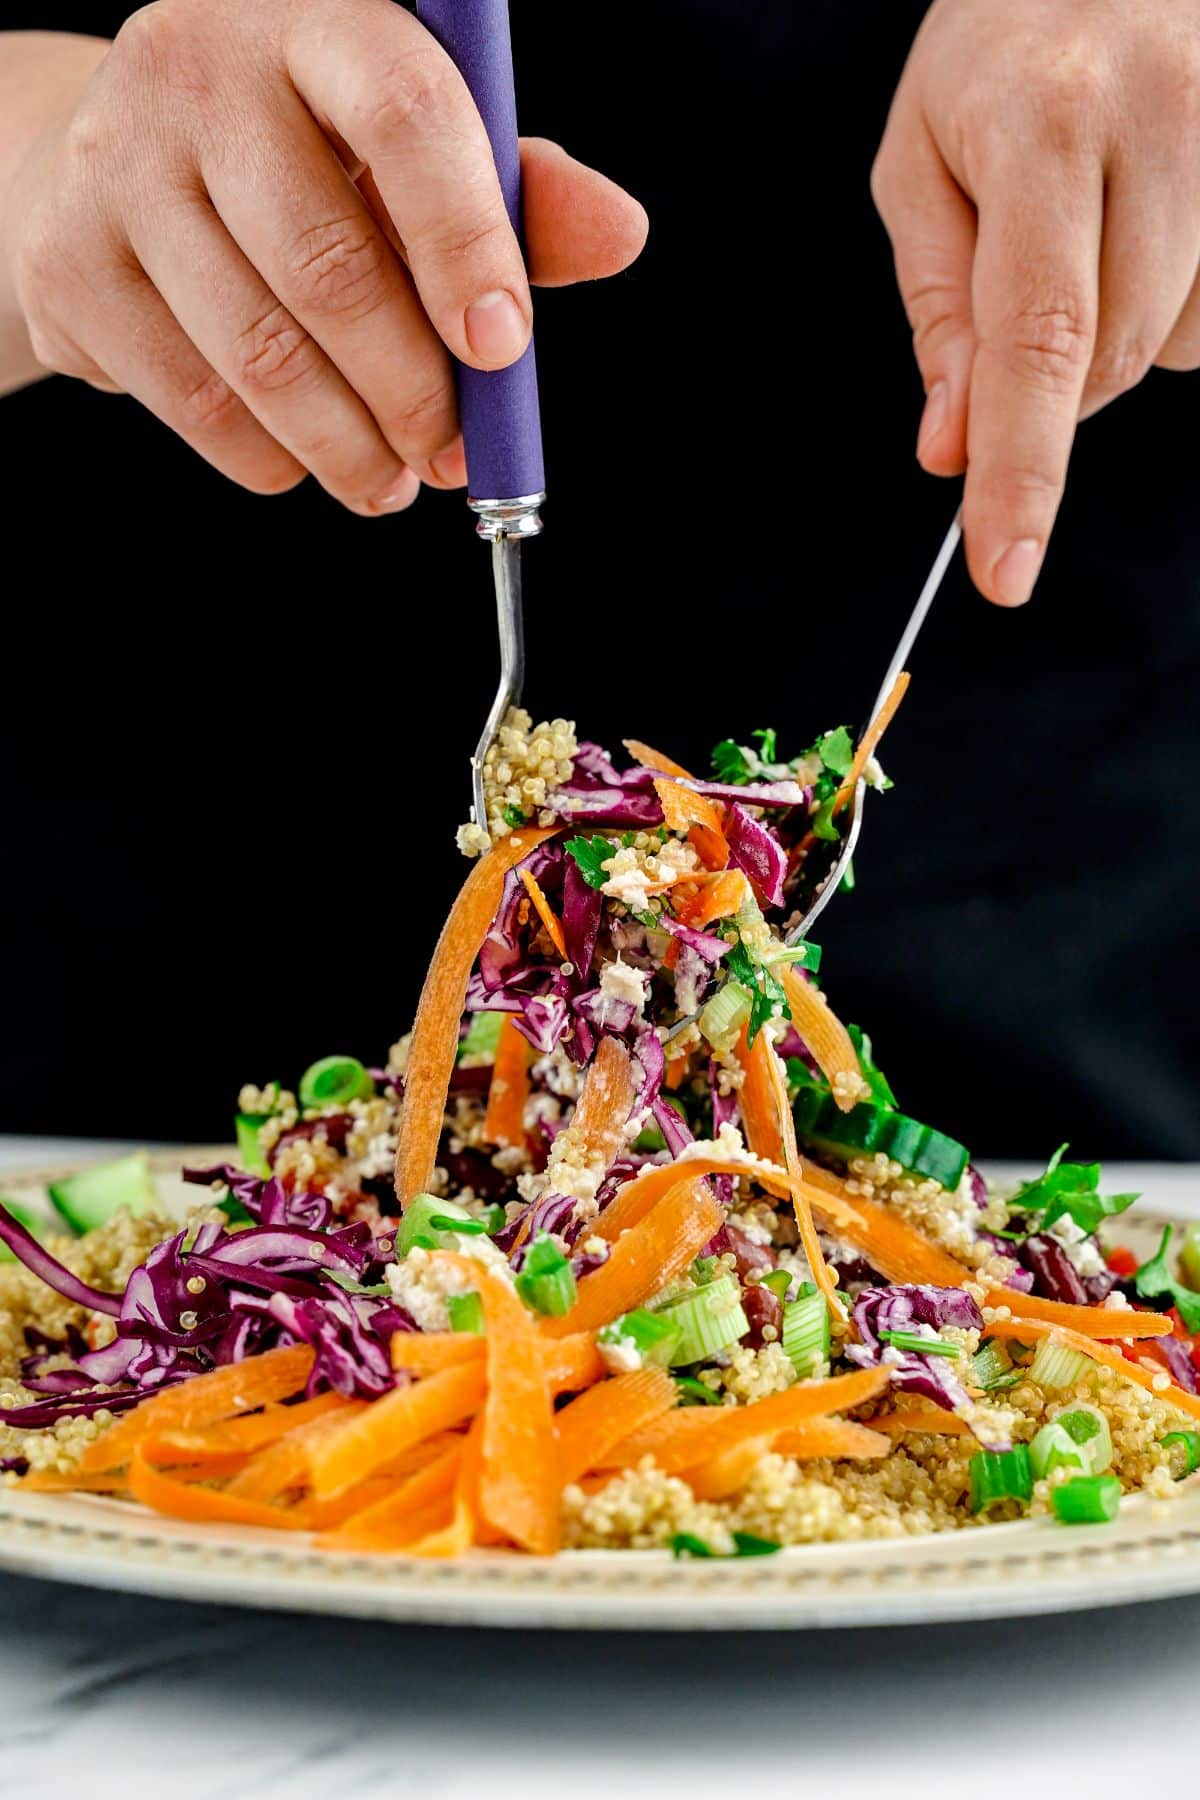 forks tossing salad above plate